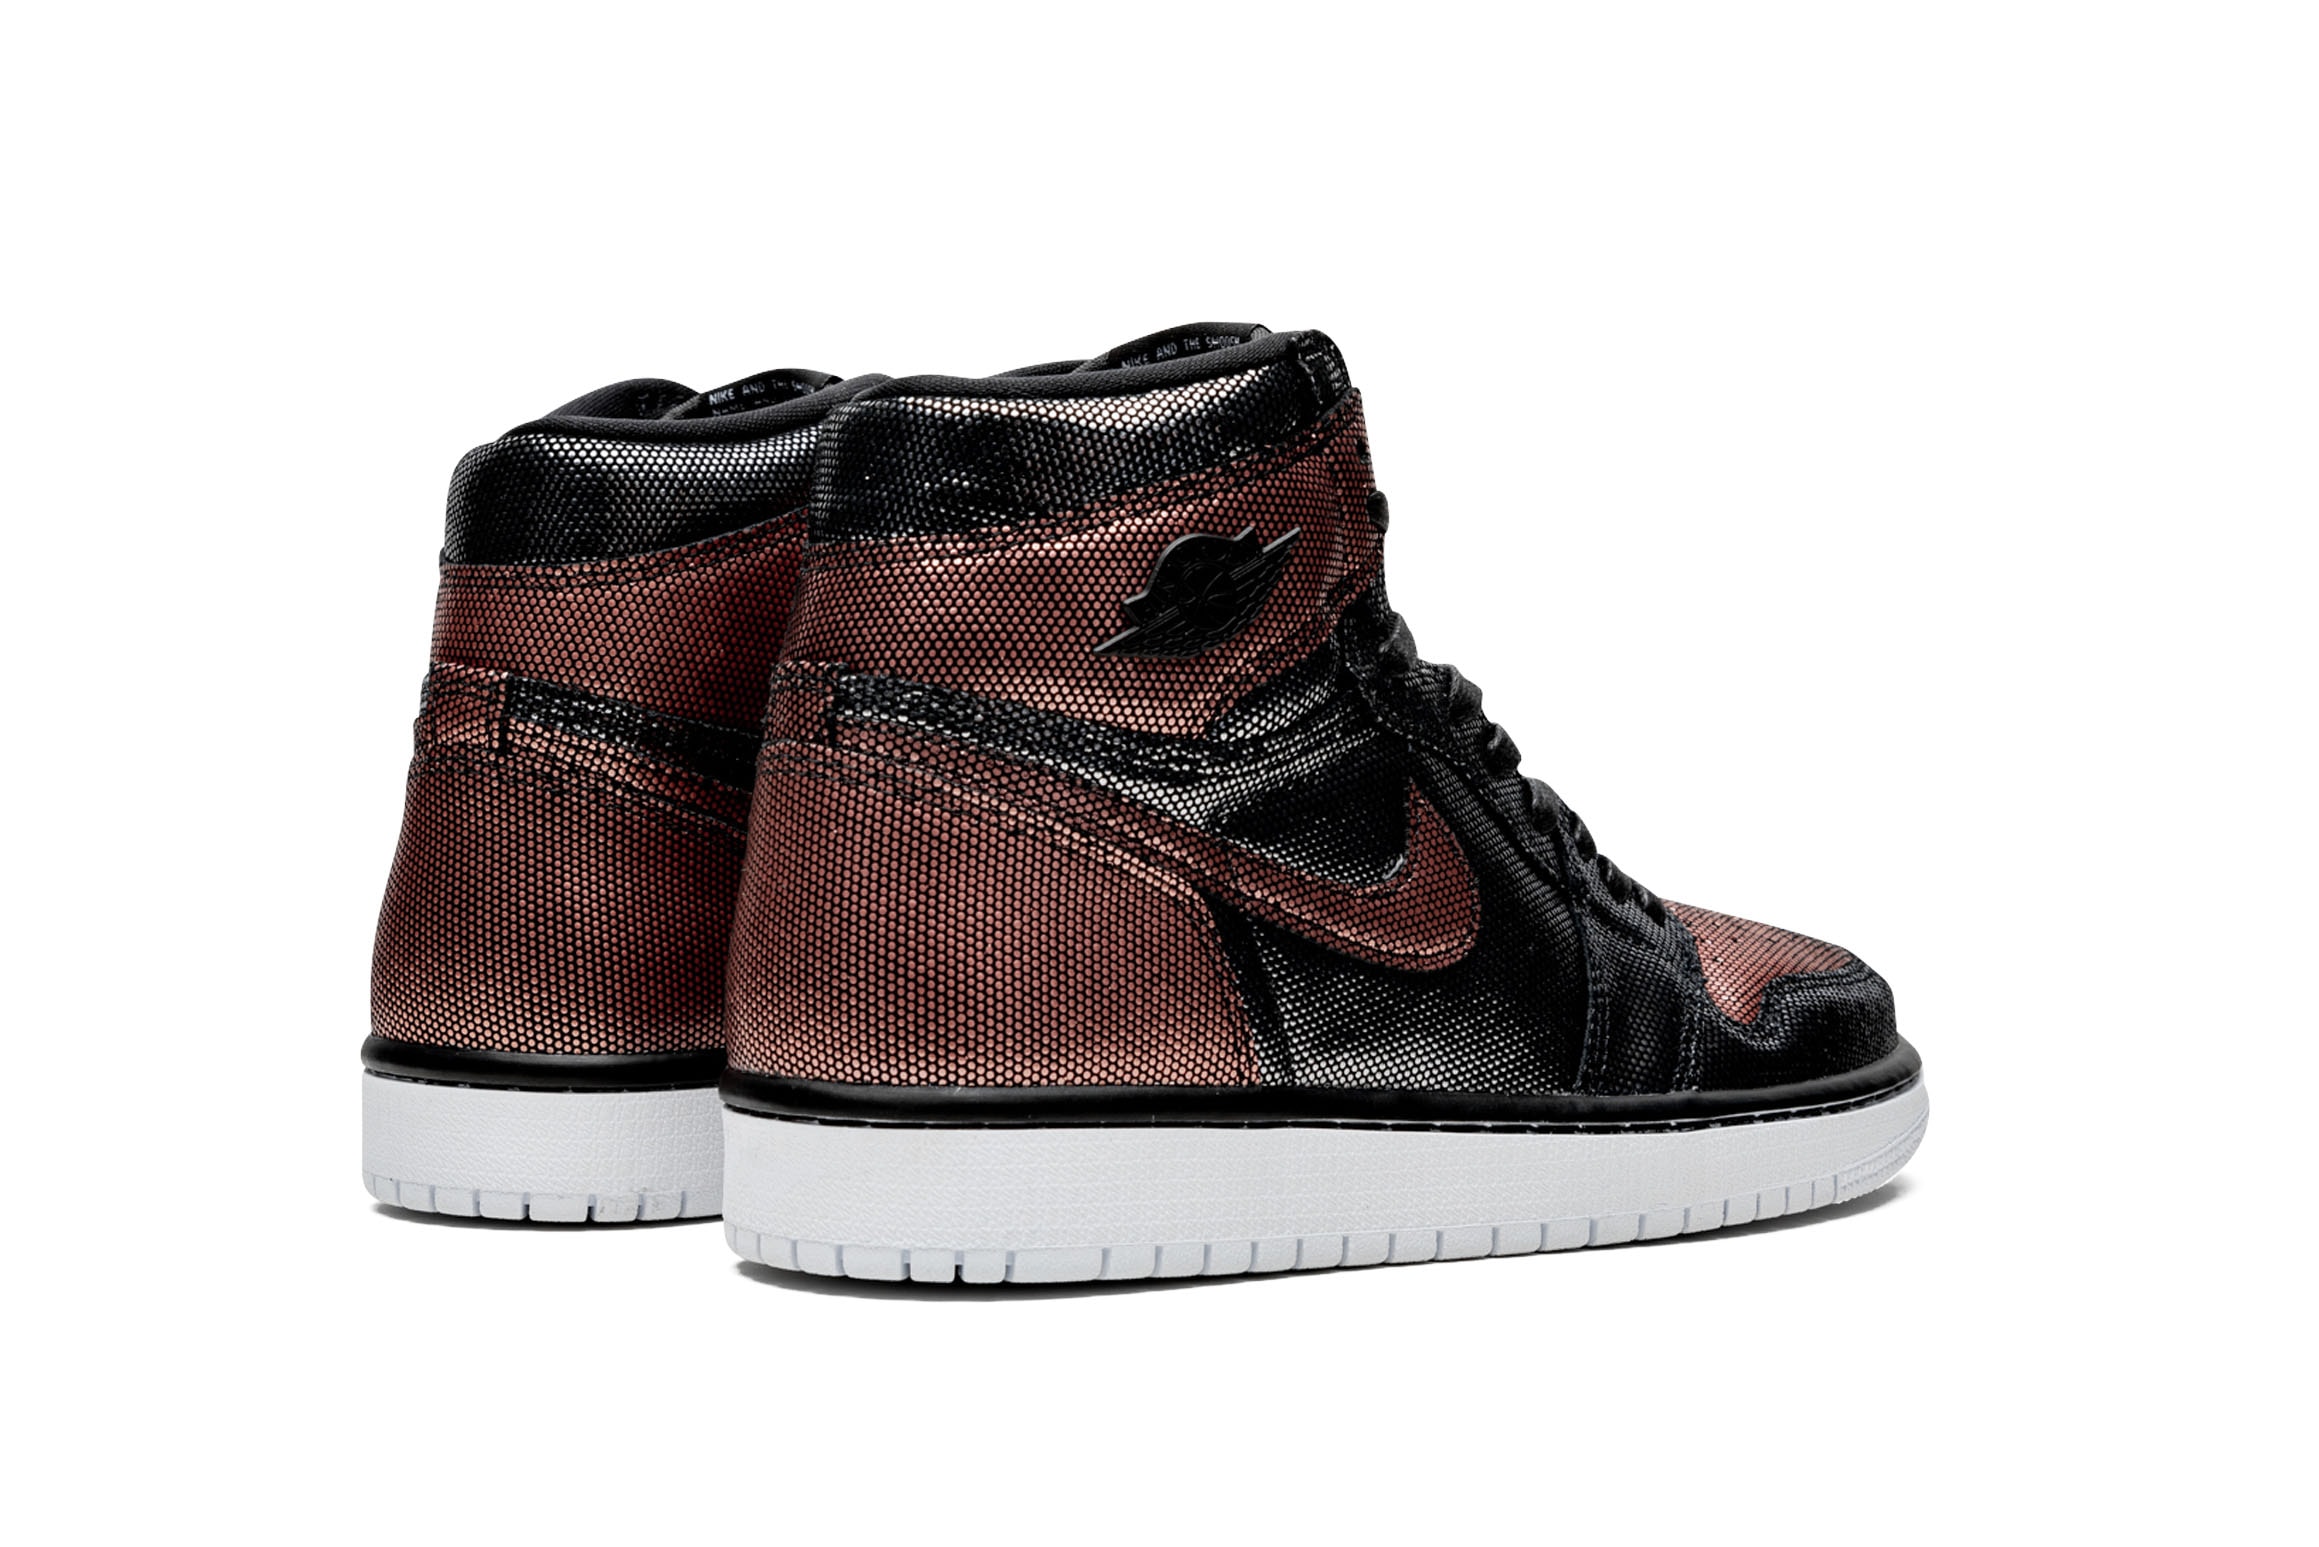 Nike Air Jordan 1 Hi "Fearless" Release Date Women's Exclusive Red Black Texture Holiday 2019 Sneaker Shoe Trainer Drop